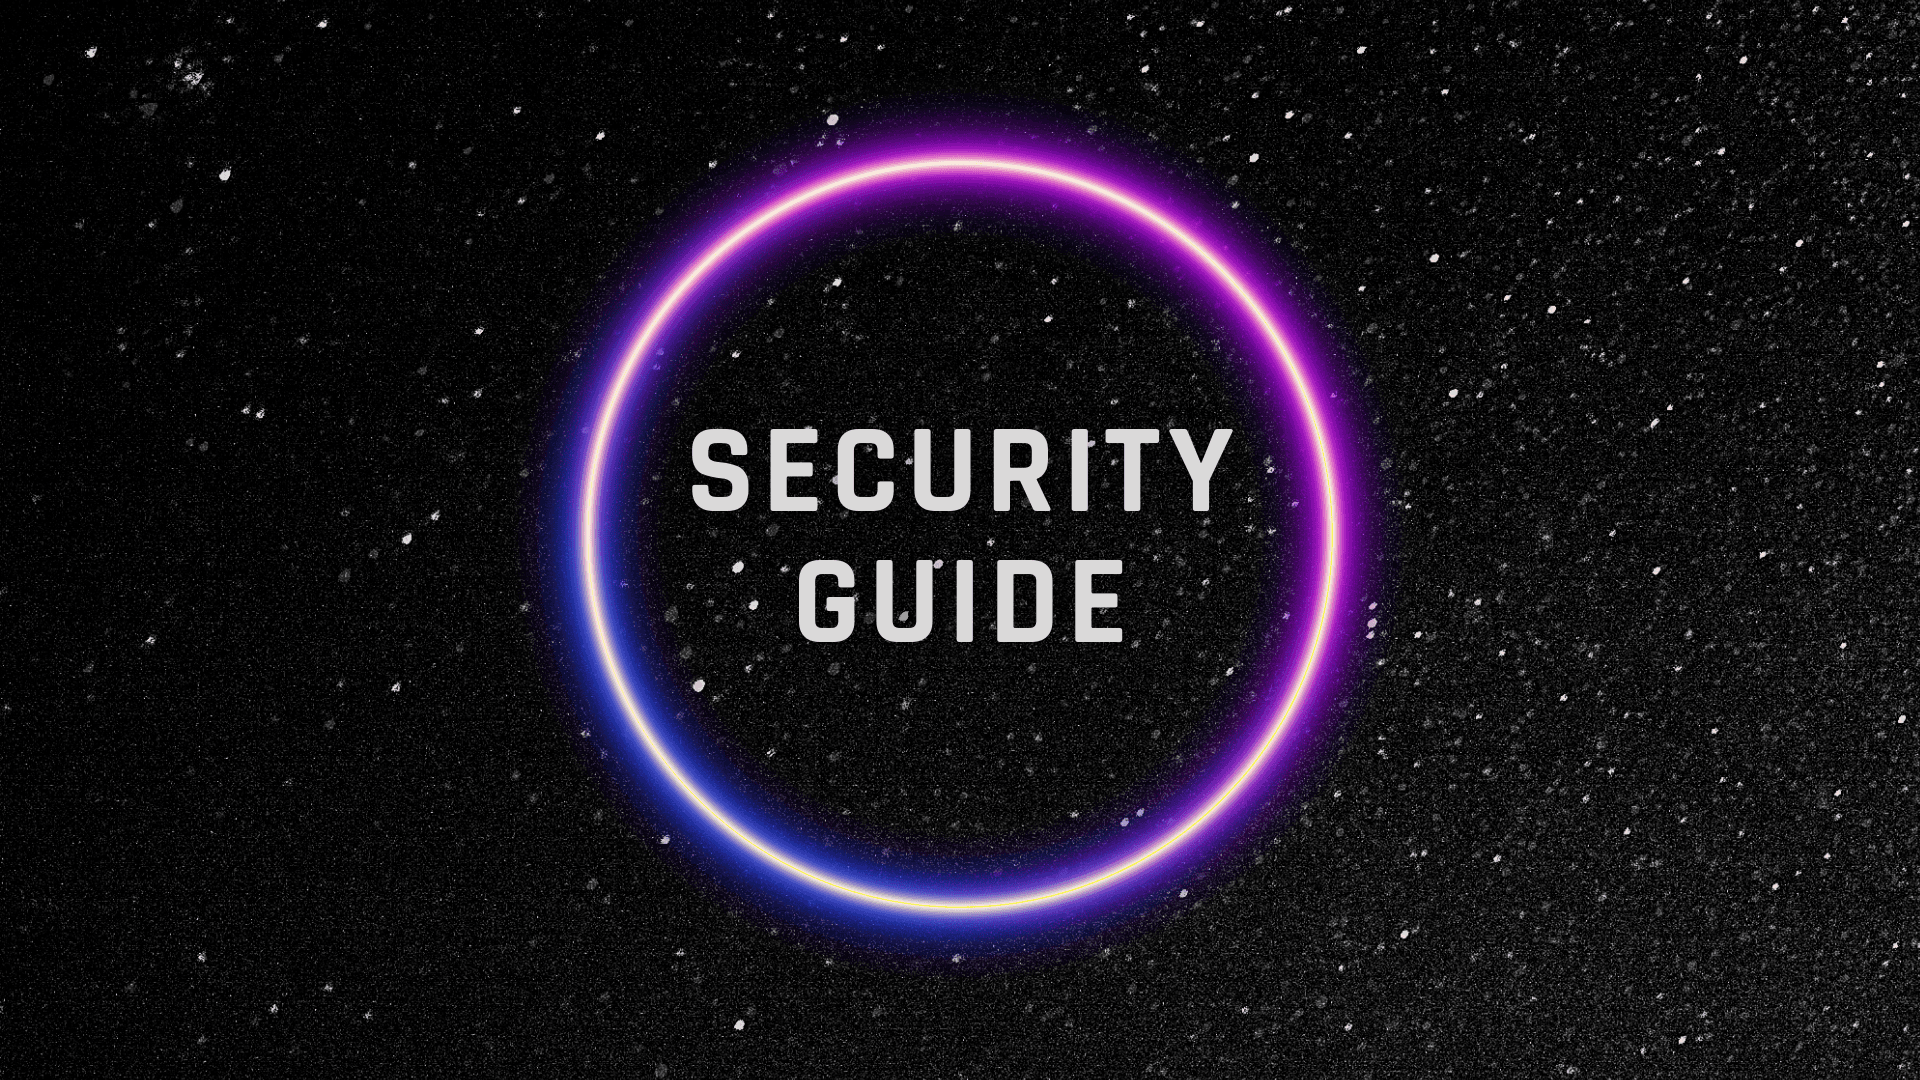 Security Guide publication